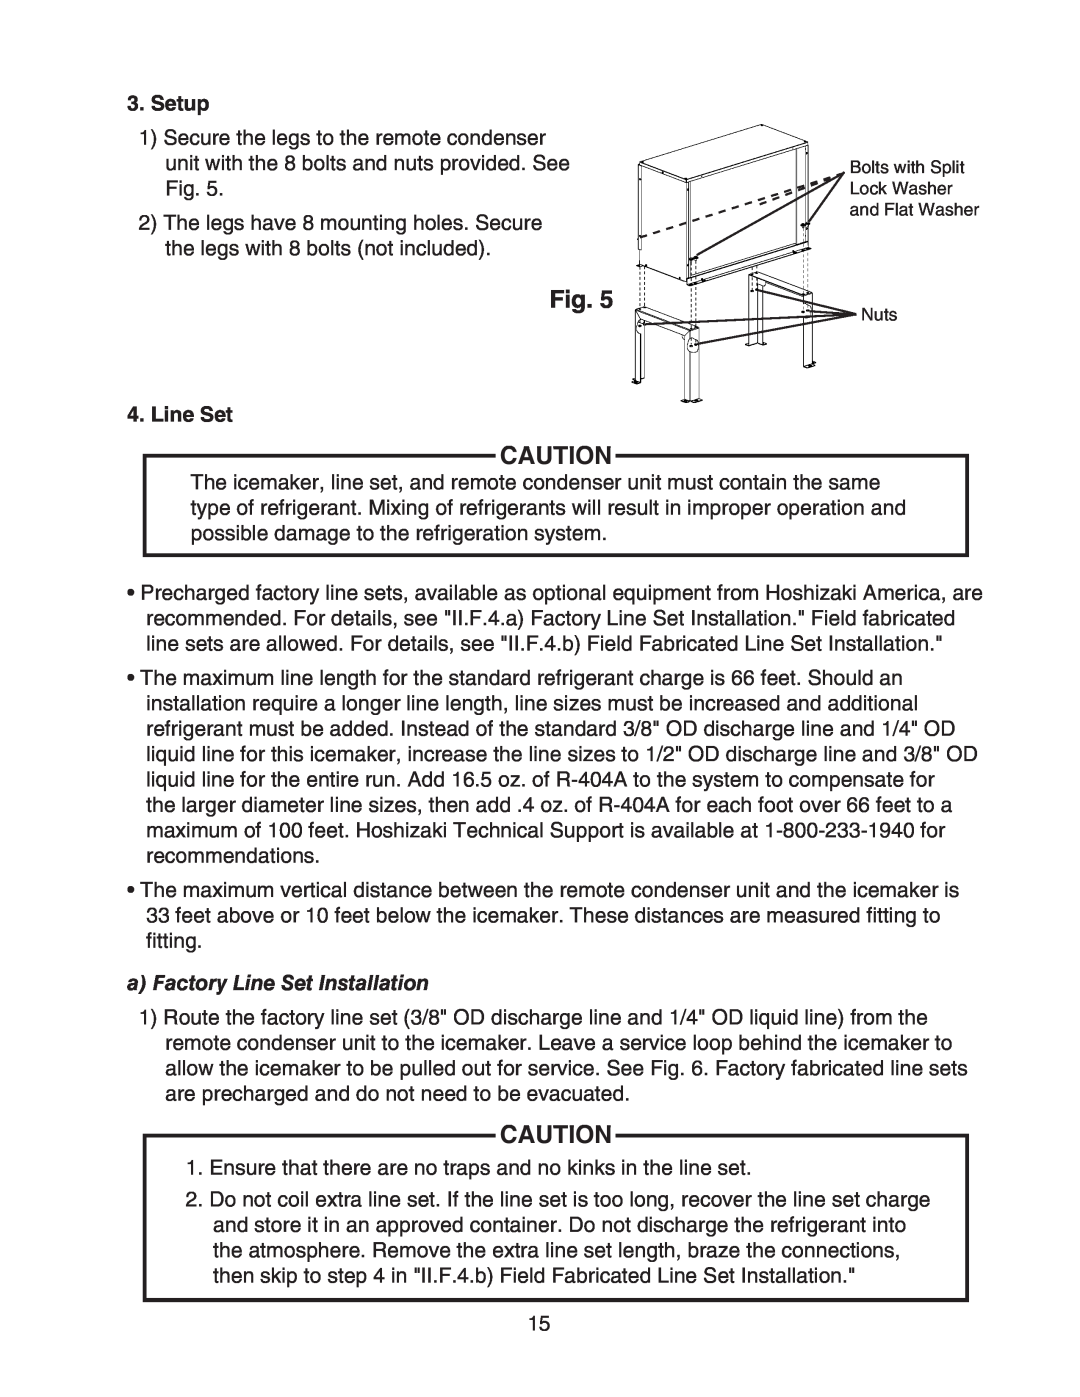 Hoshizaki KM-650MAH instruction manual Setup, a Factory Line Set Installation 